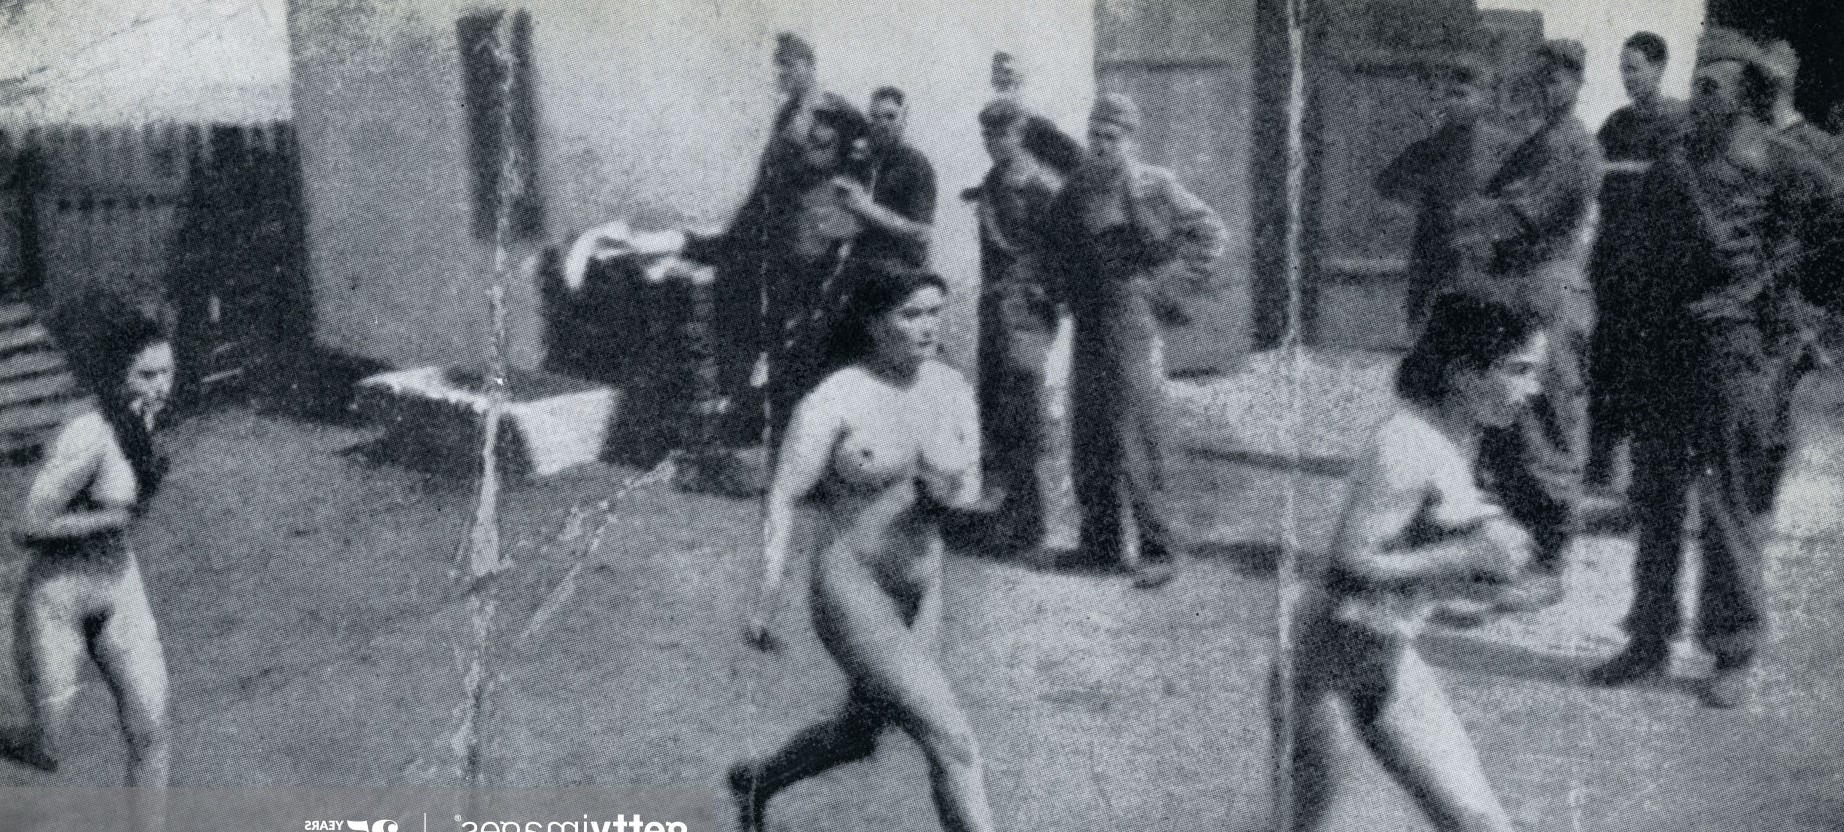 Naked women humiliated image